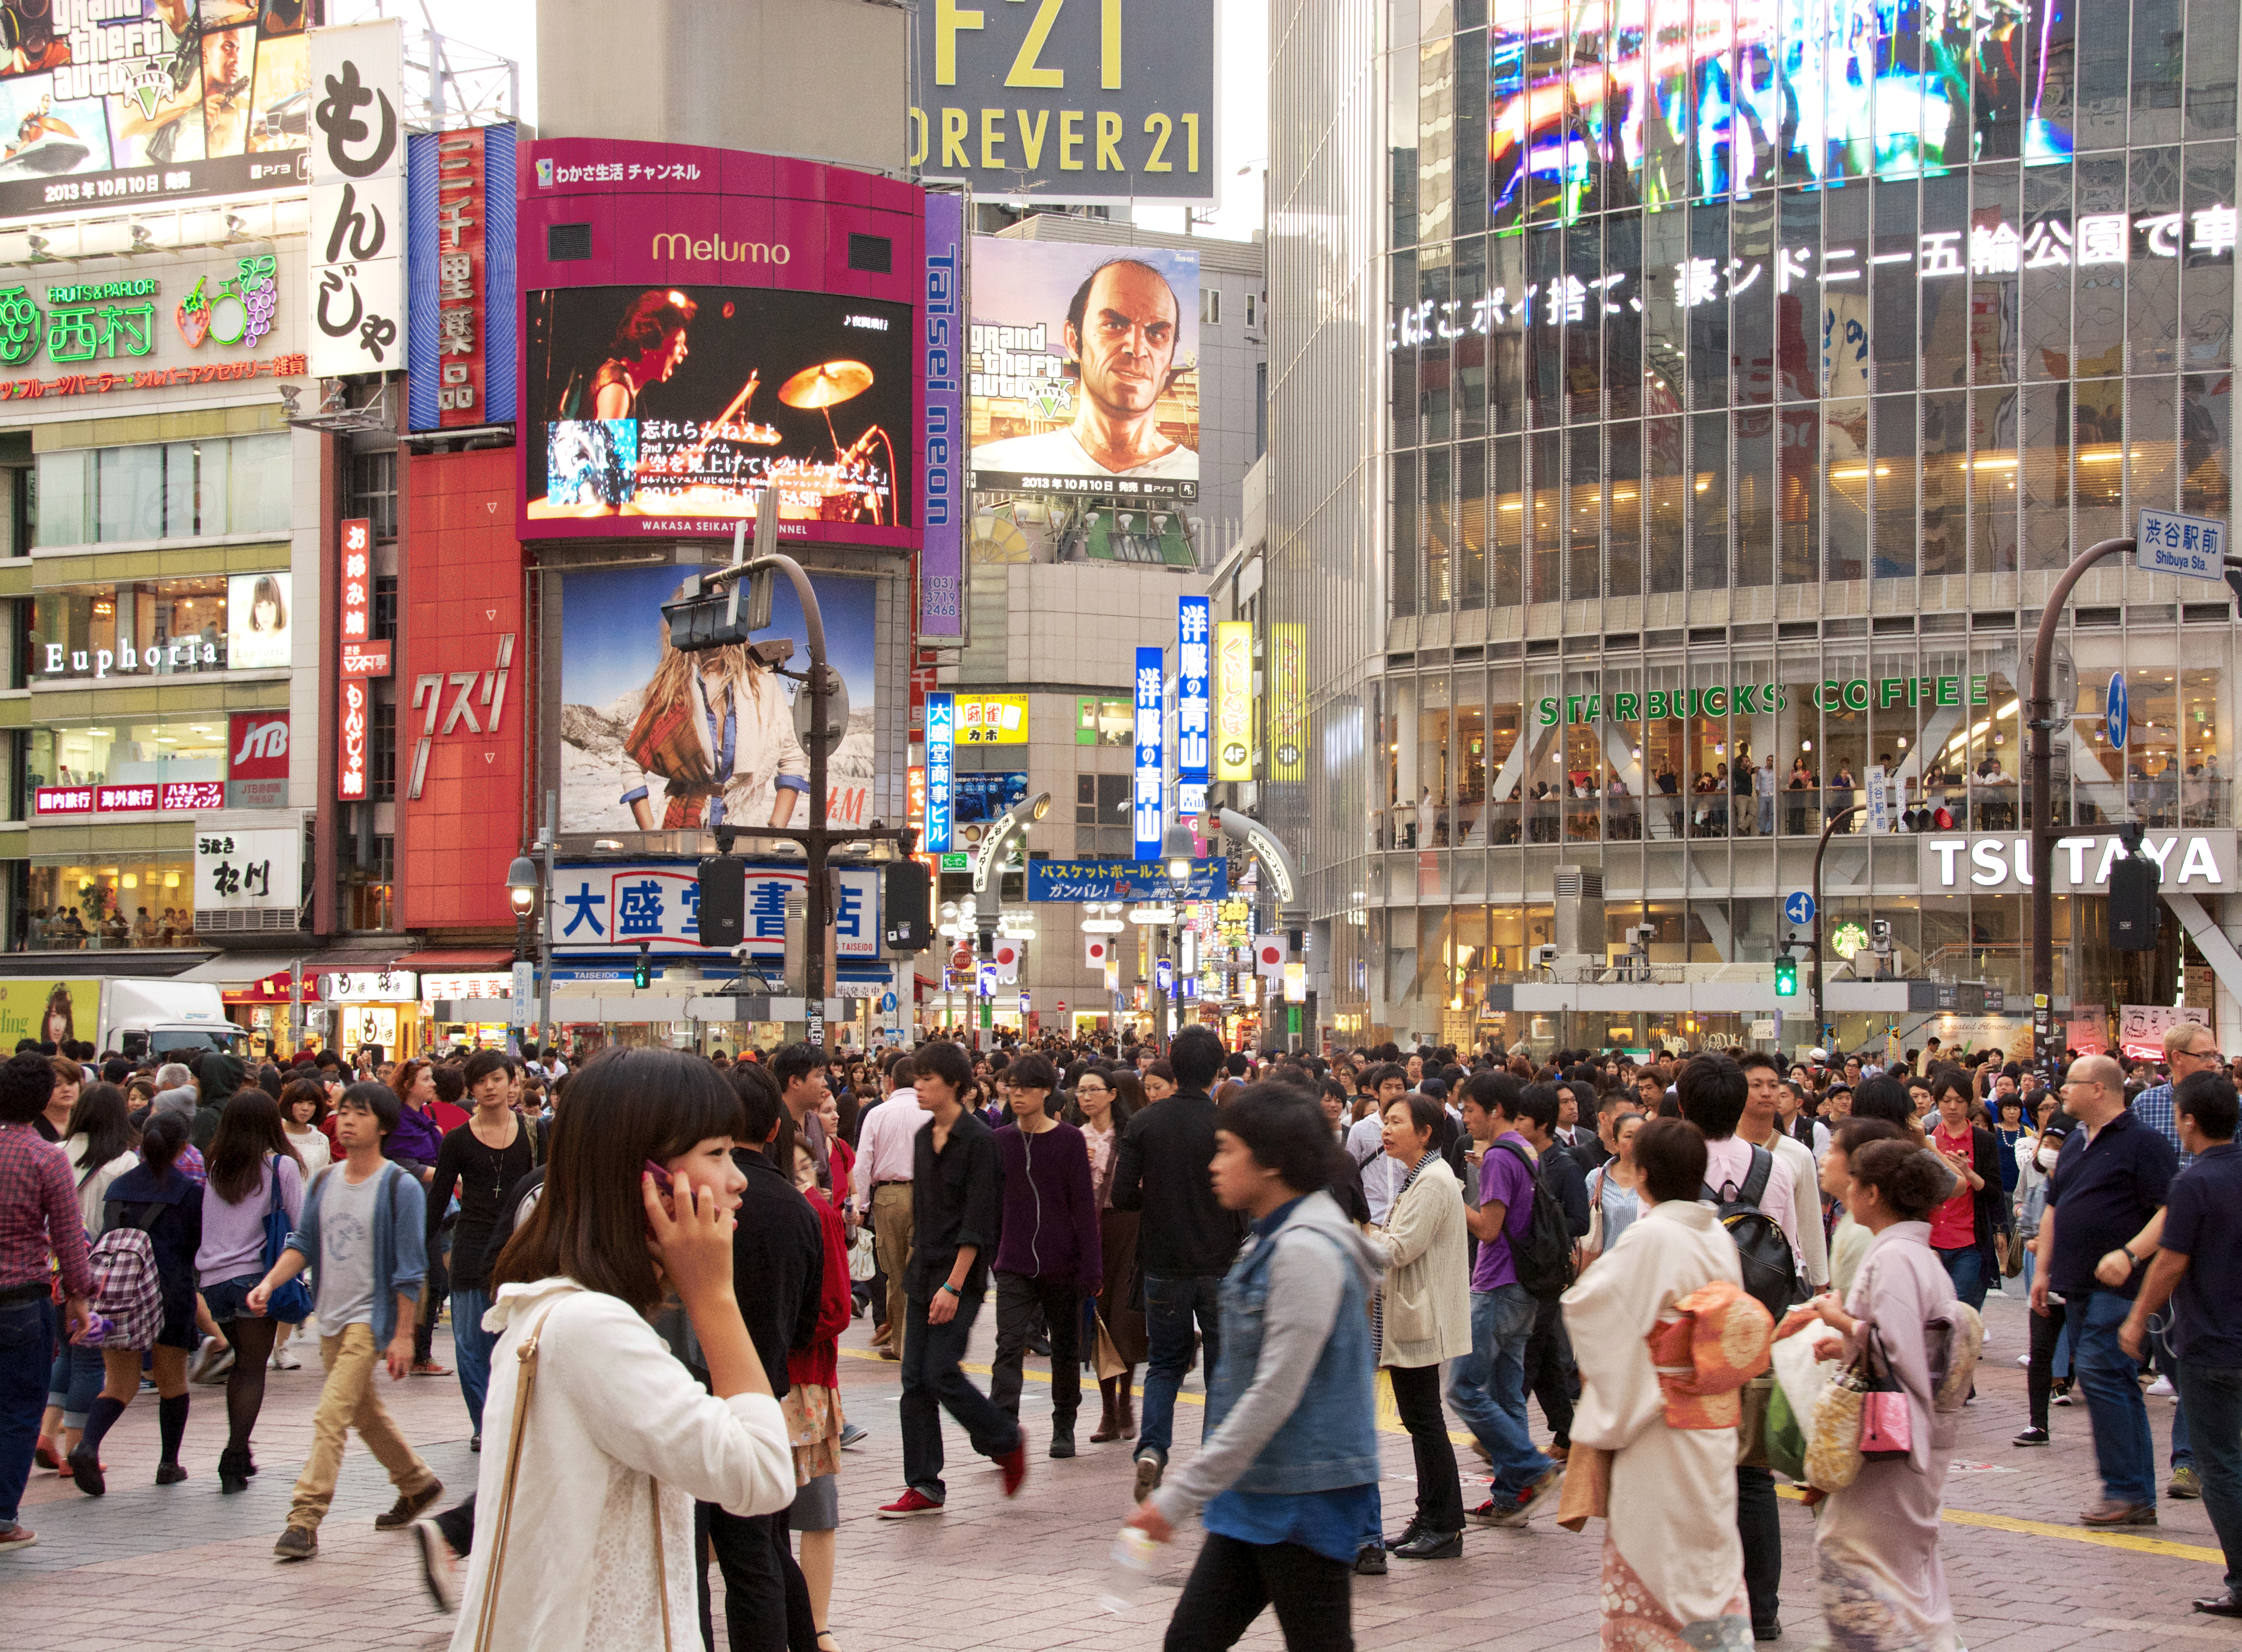 Shibuya Crossing and Hachiko's Statue